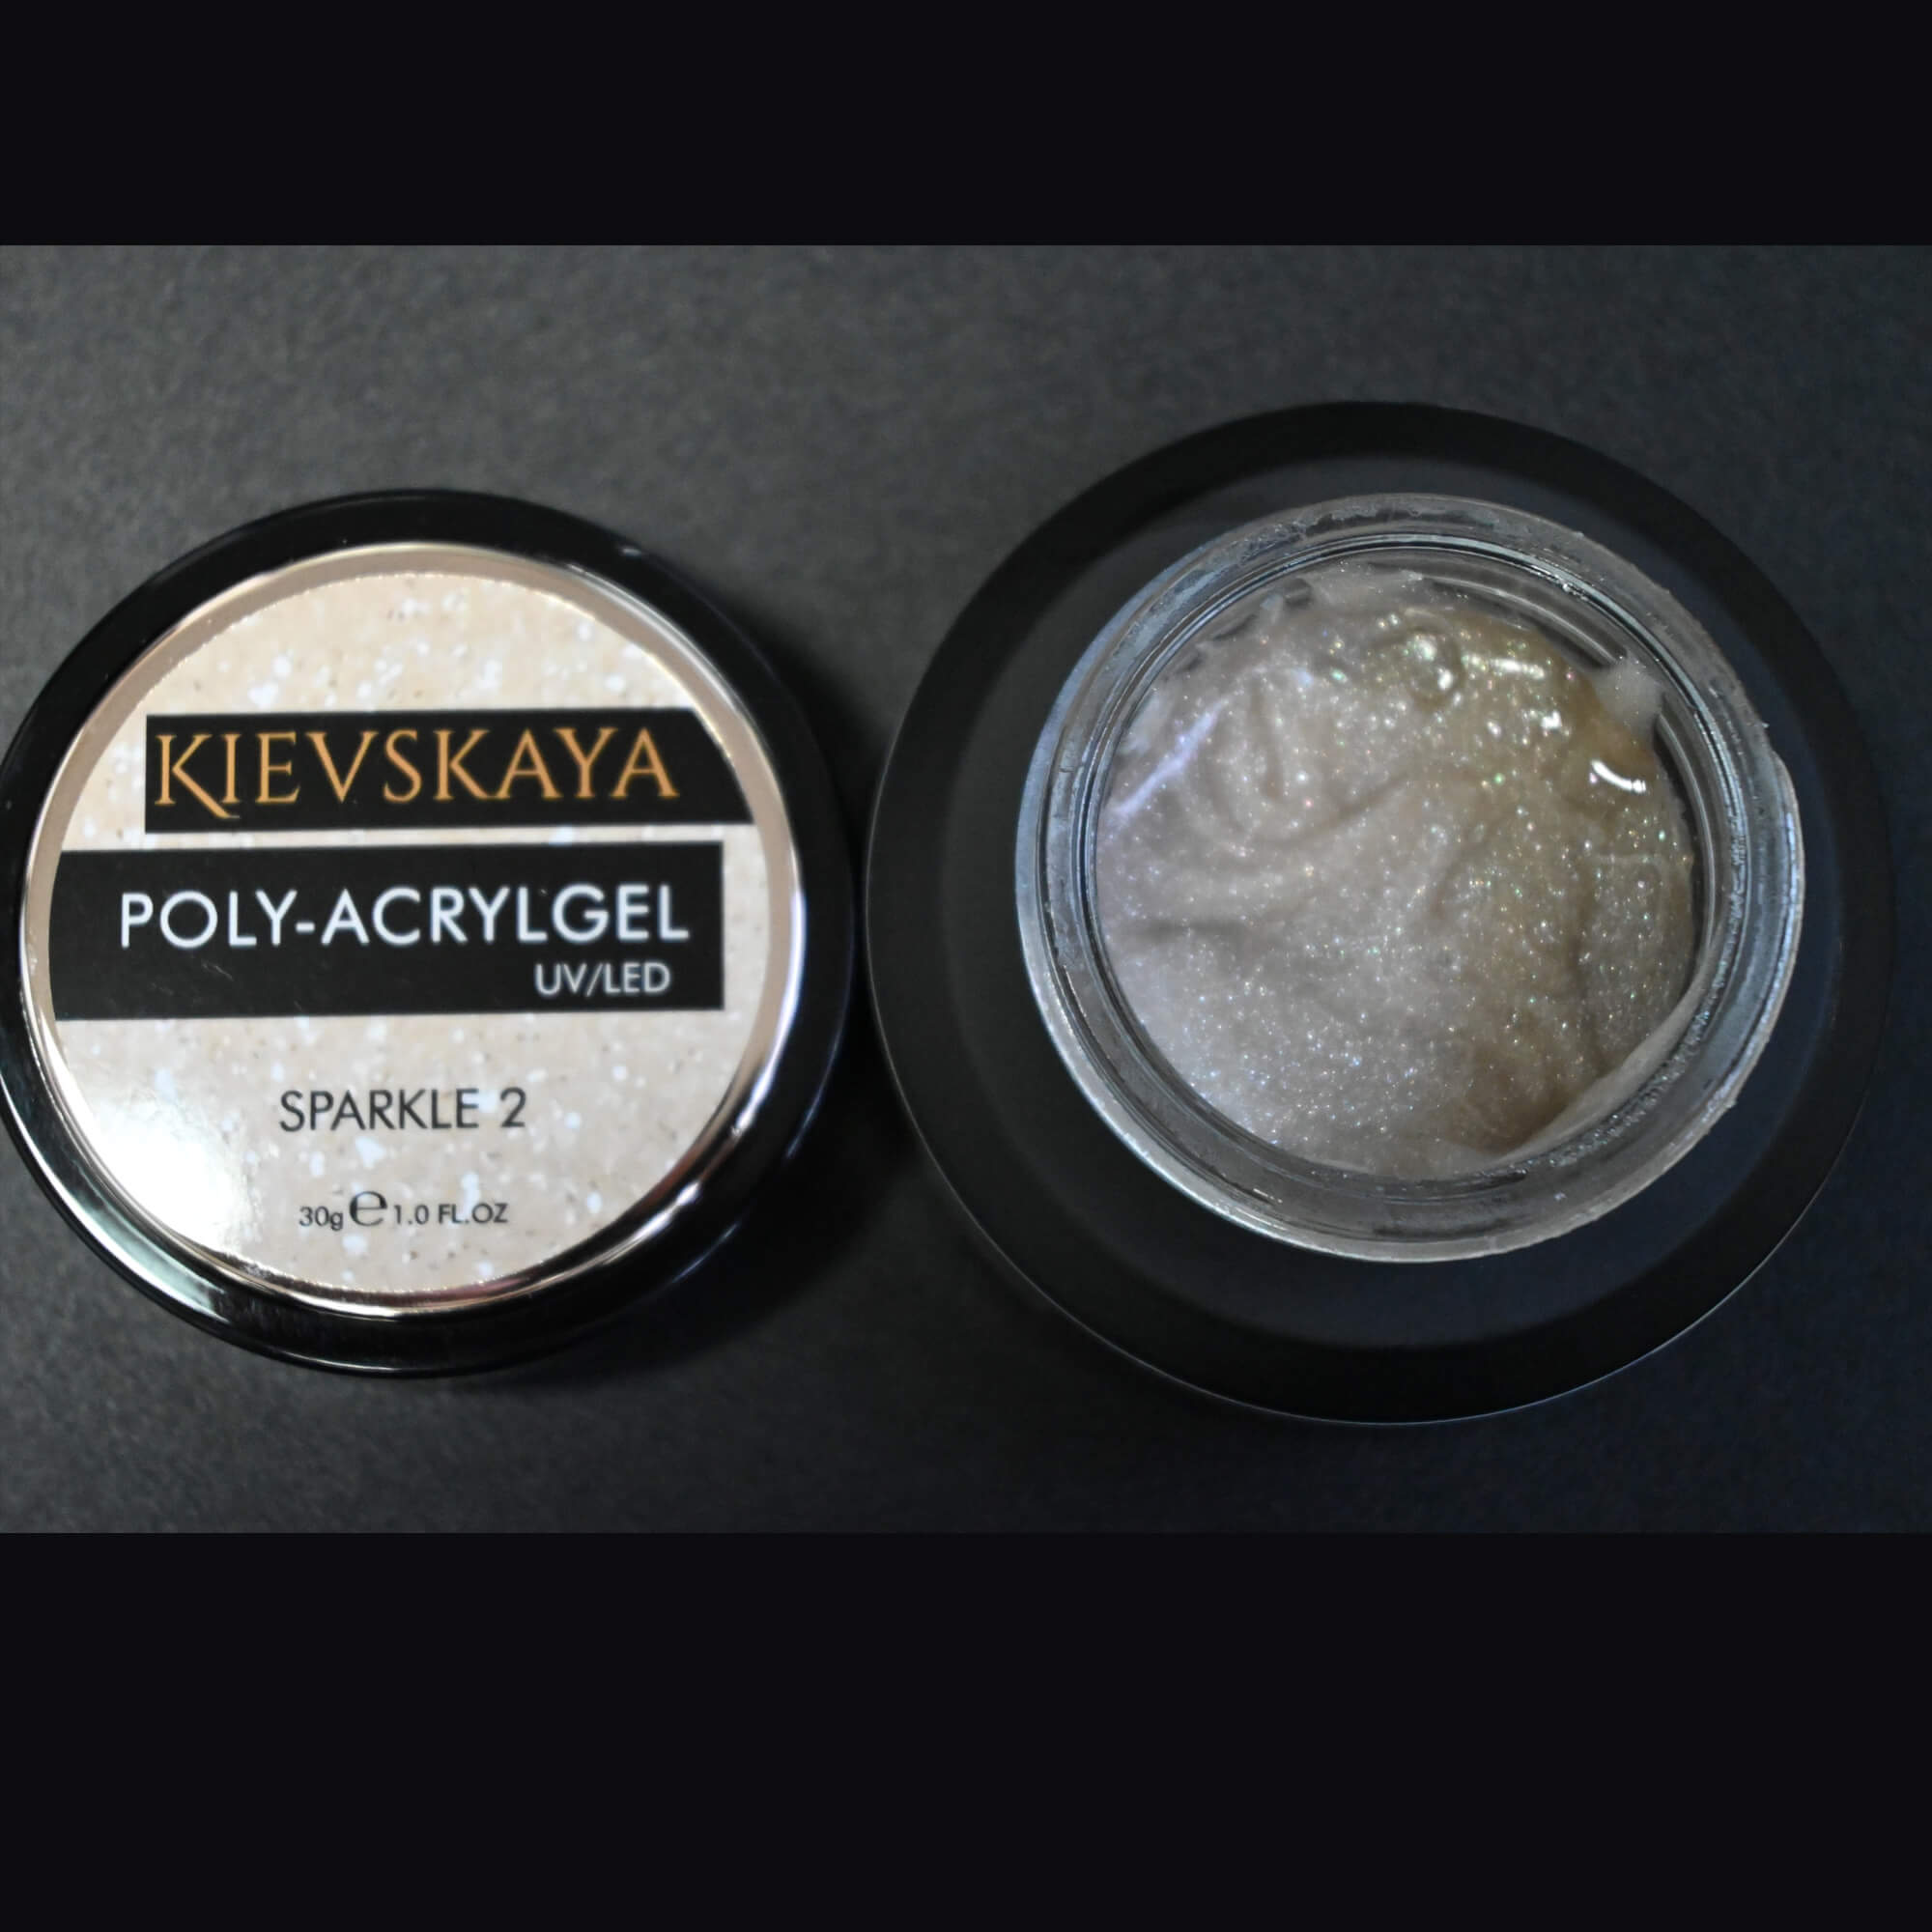 Poly-acrylgel Sparkle Kievskaya 30gr-sparkle02 - Sparkle02 - Everin.ro